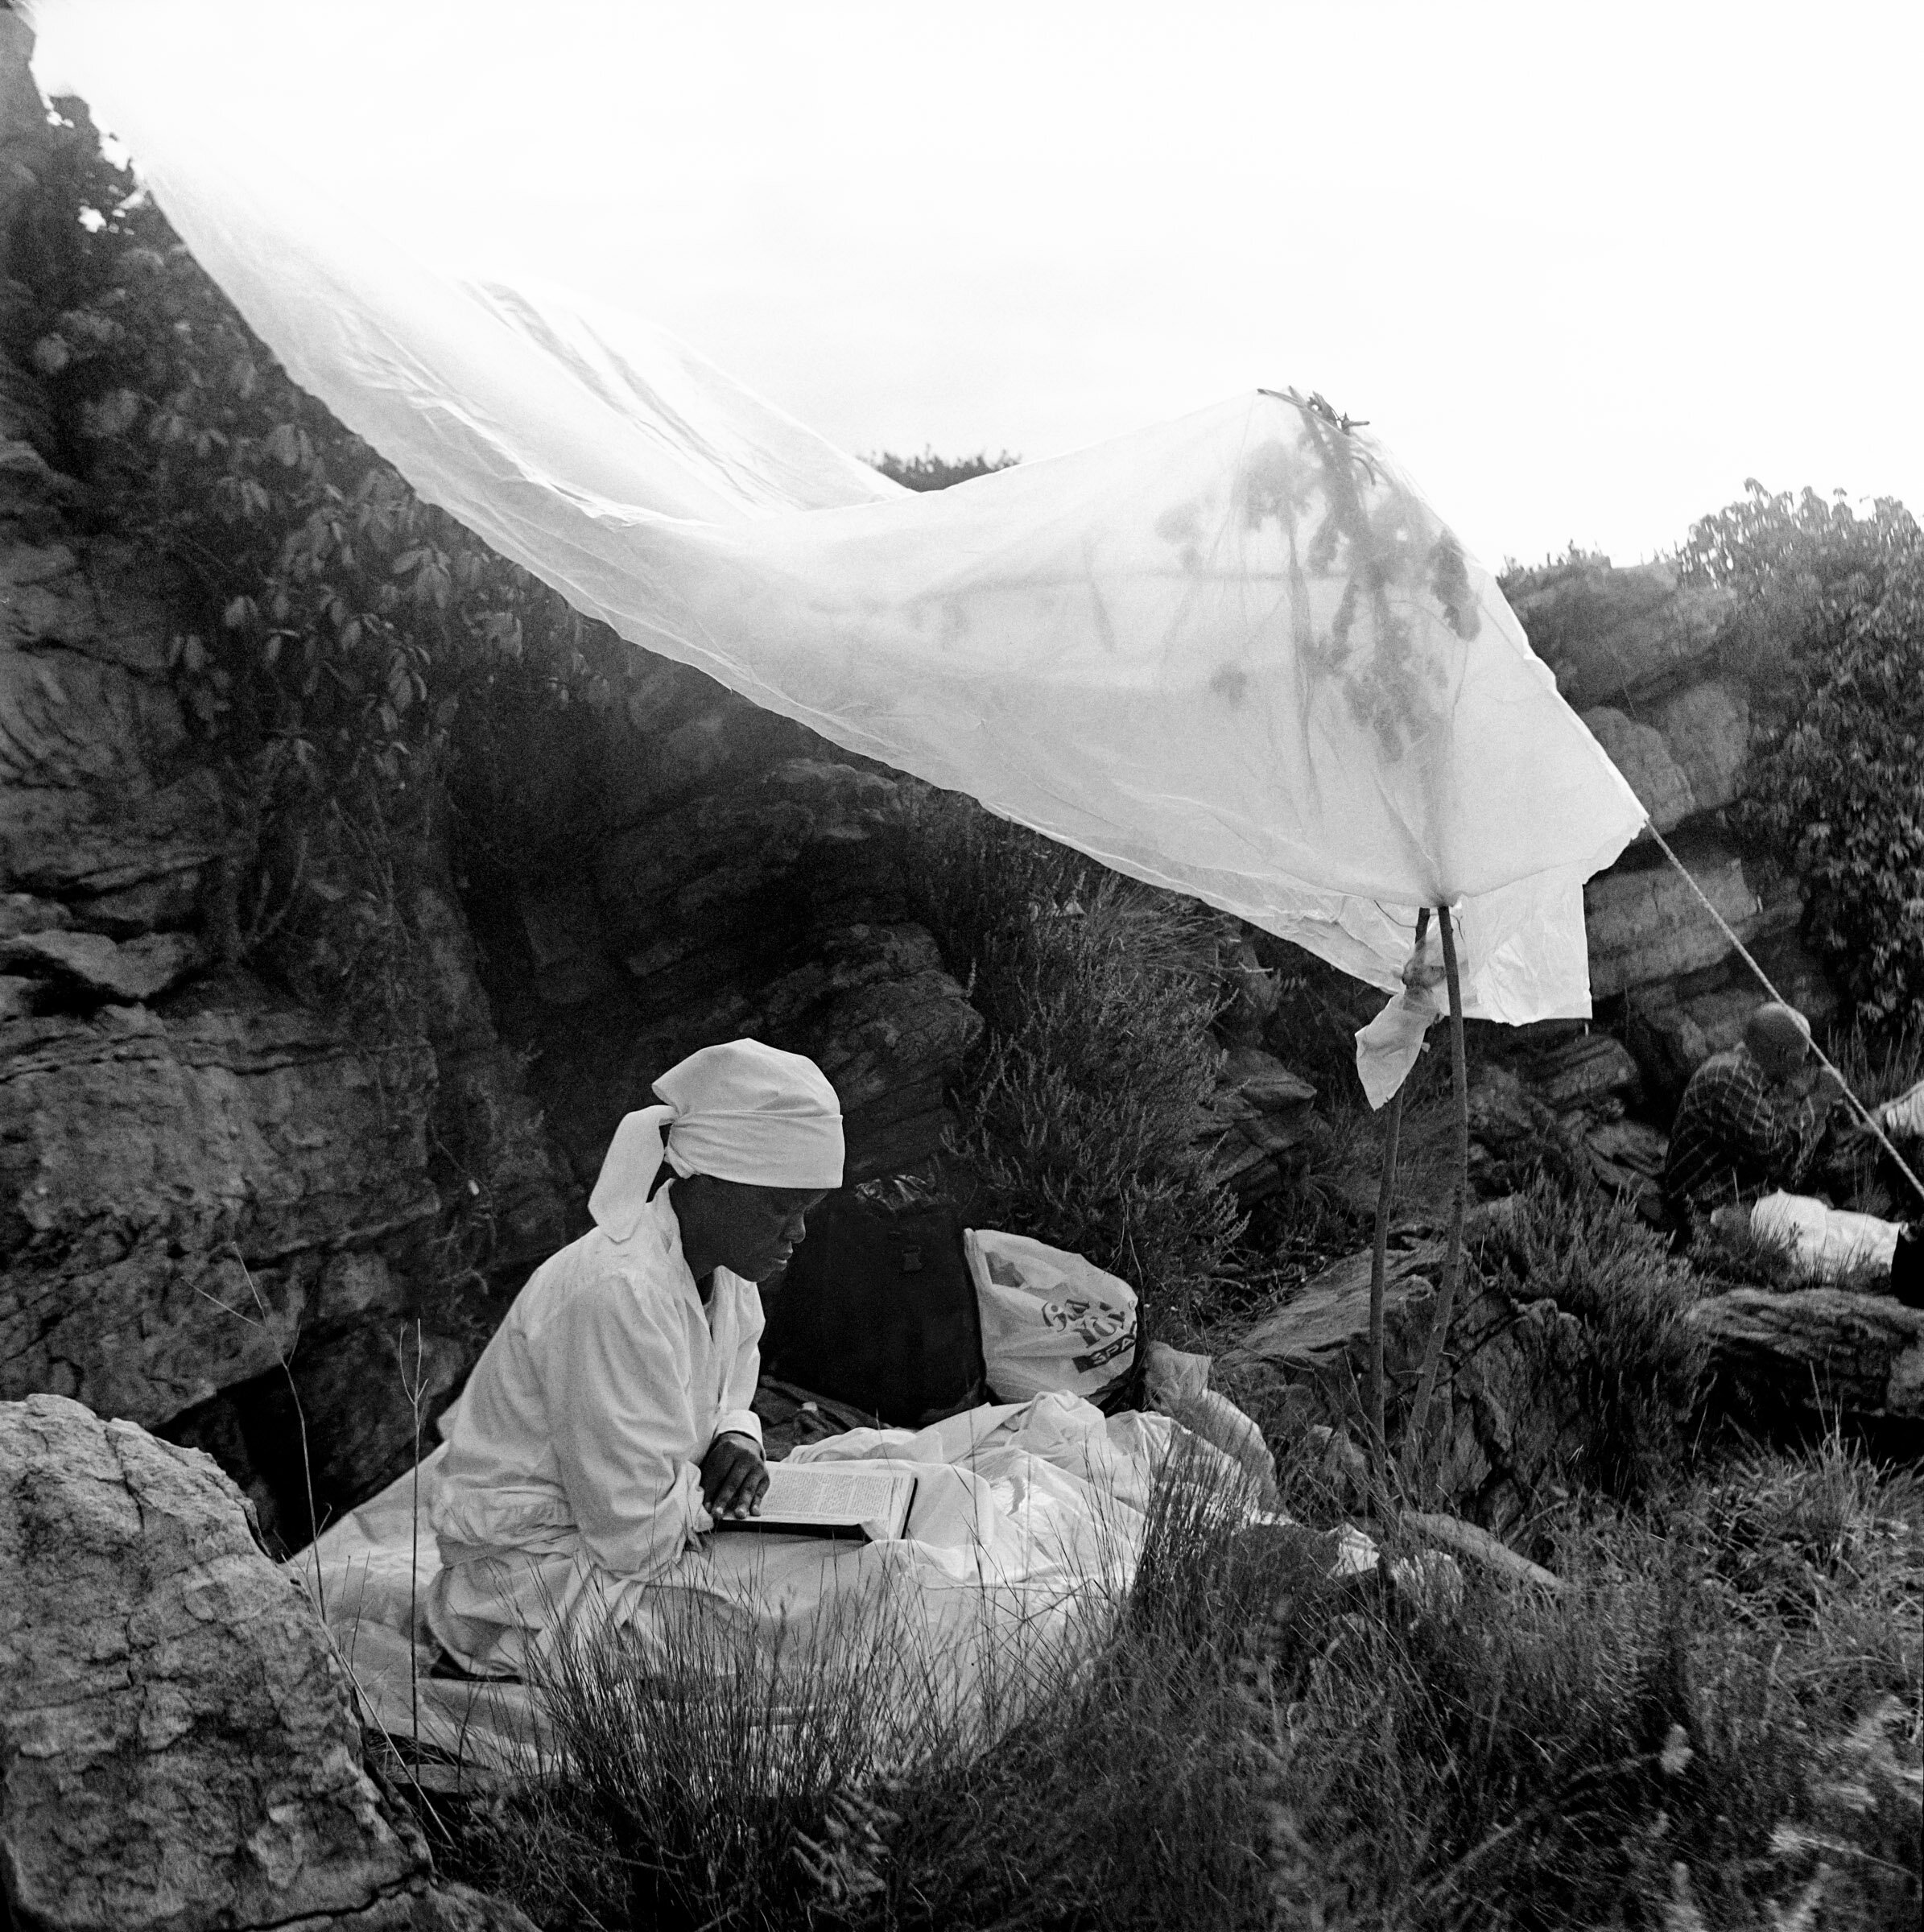  A female member of a Zioni sect reads a bible under a shelter of plastic sheet alongside rocks on Melville Koppie, Johannesburg, South Africa, 2007. photo Greg Marinovich 